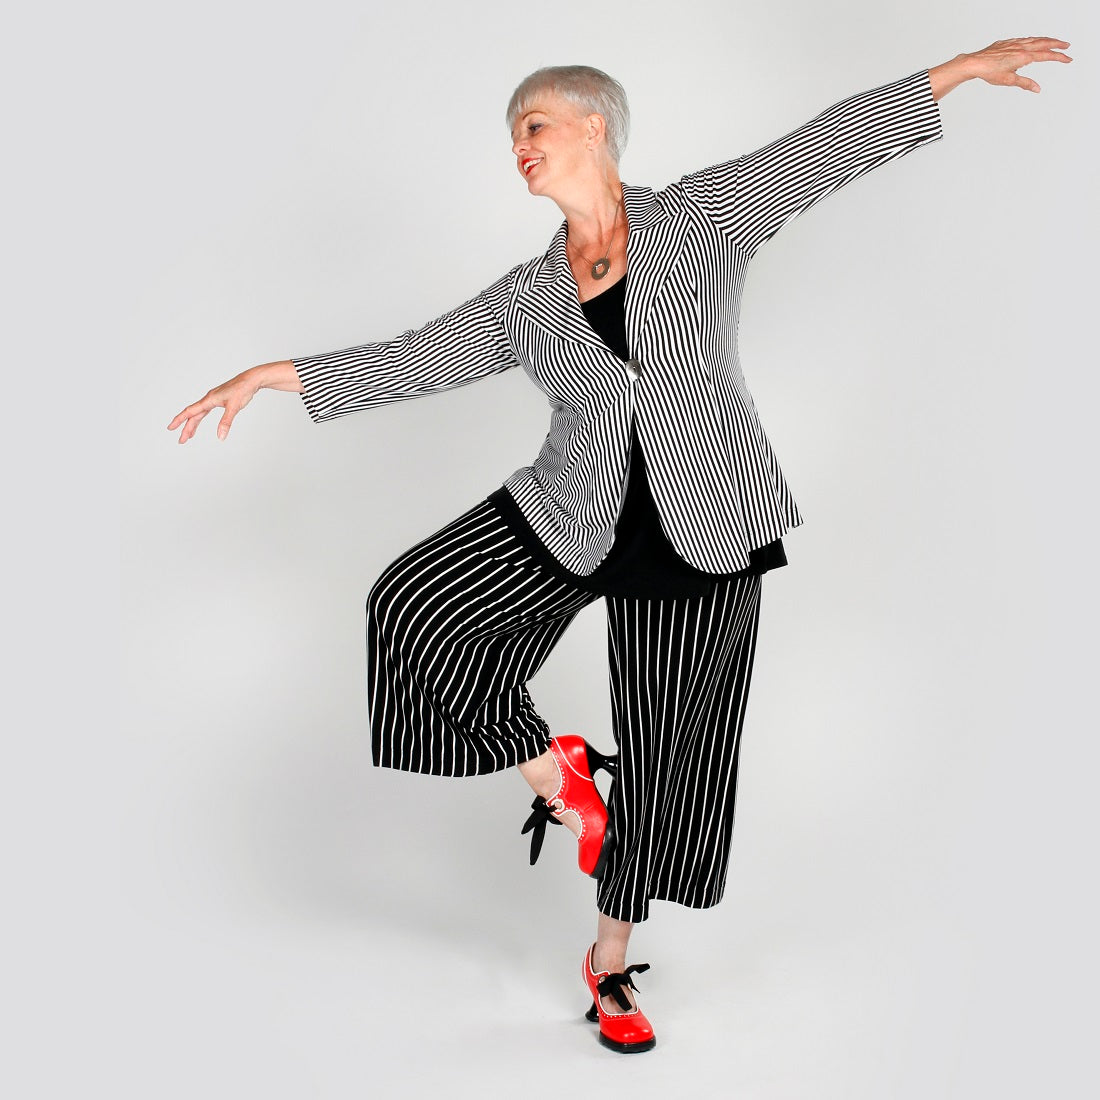 Dancer Gia Holman wears designs by Diane Kennedy